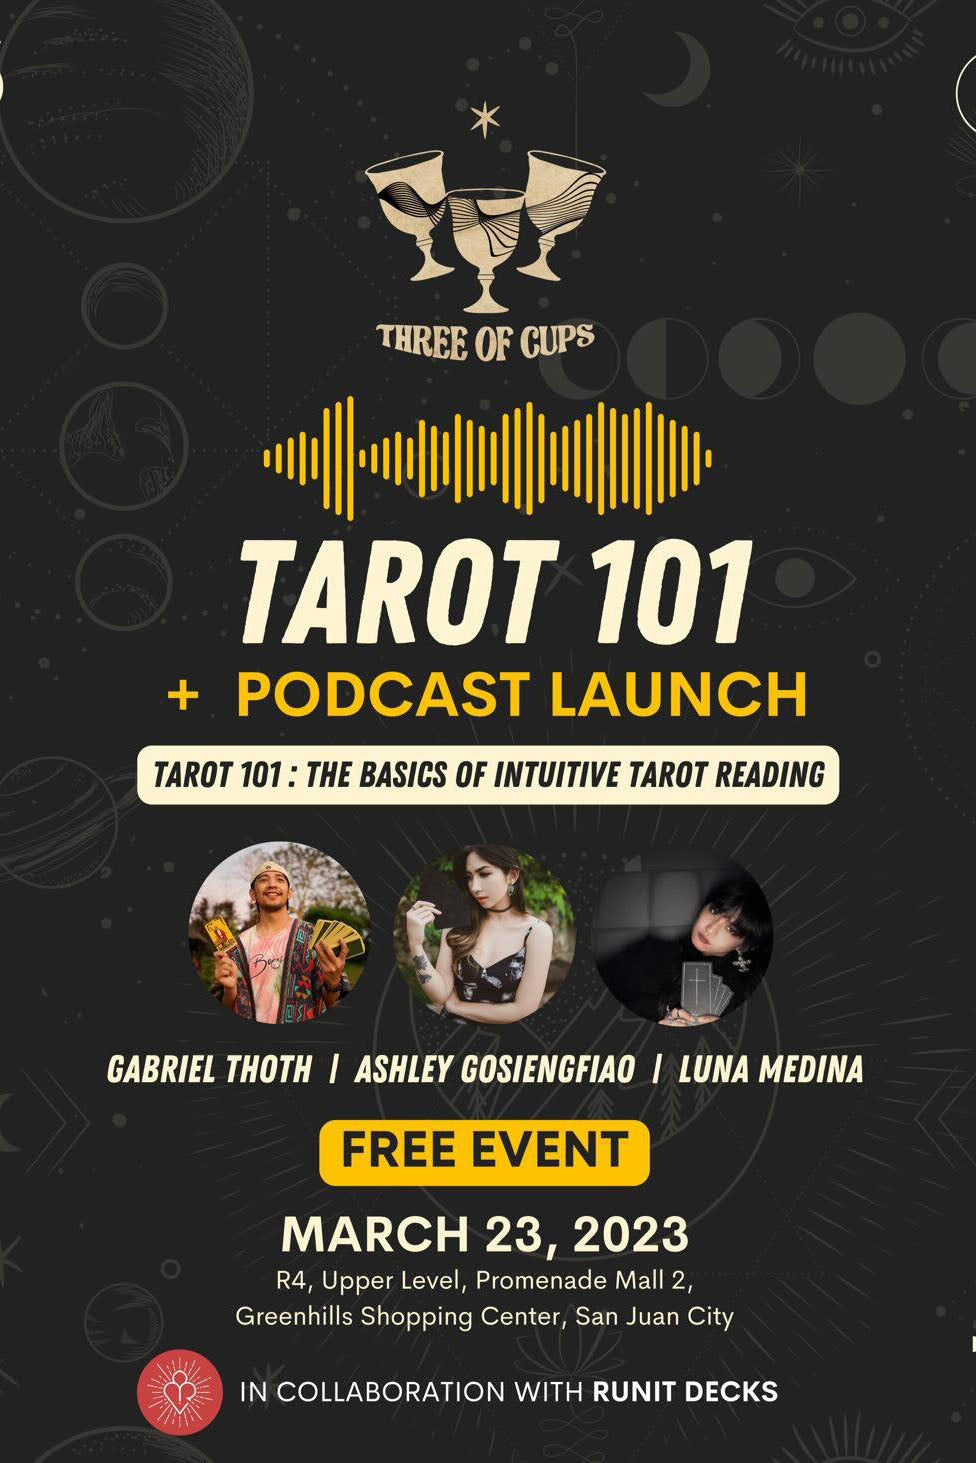 EVENT: Tarot 101 + Podcast Launch